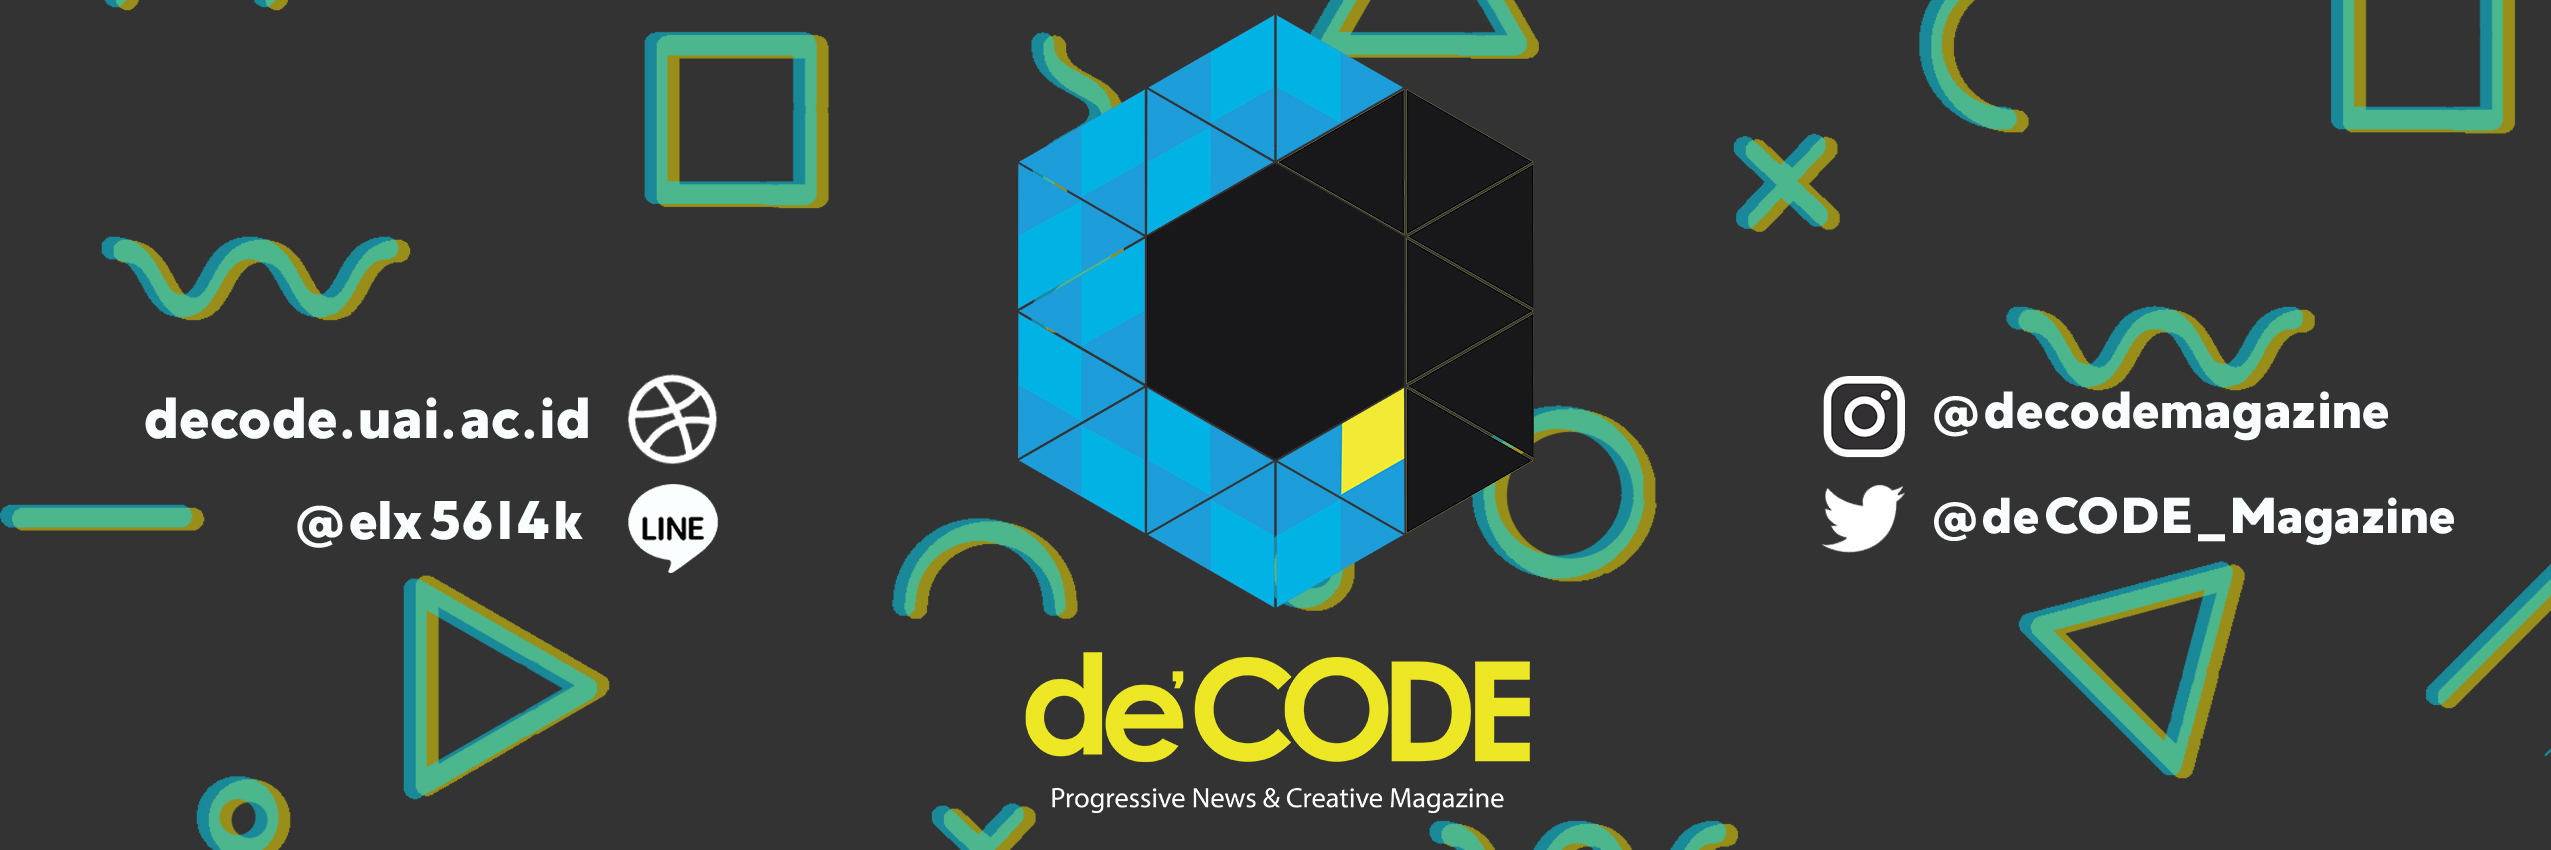 deCODE Magazine